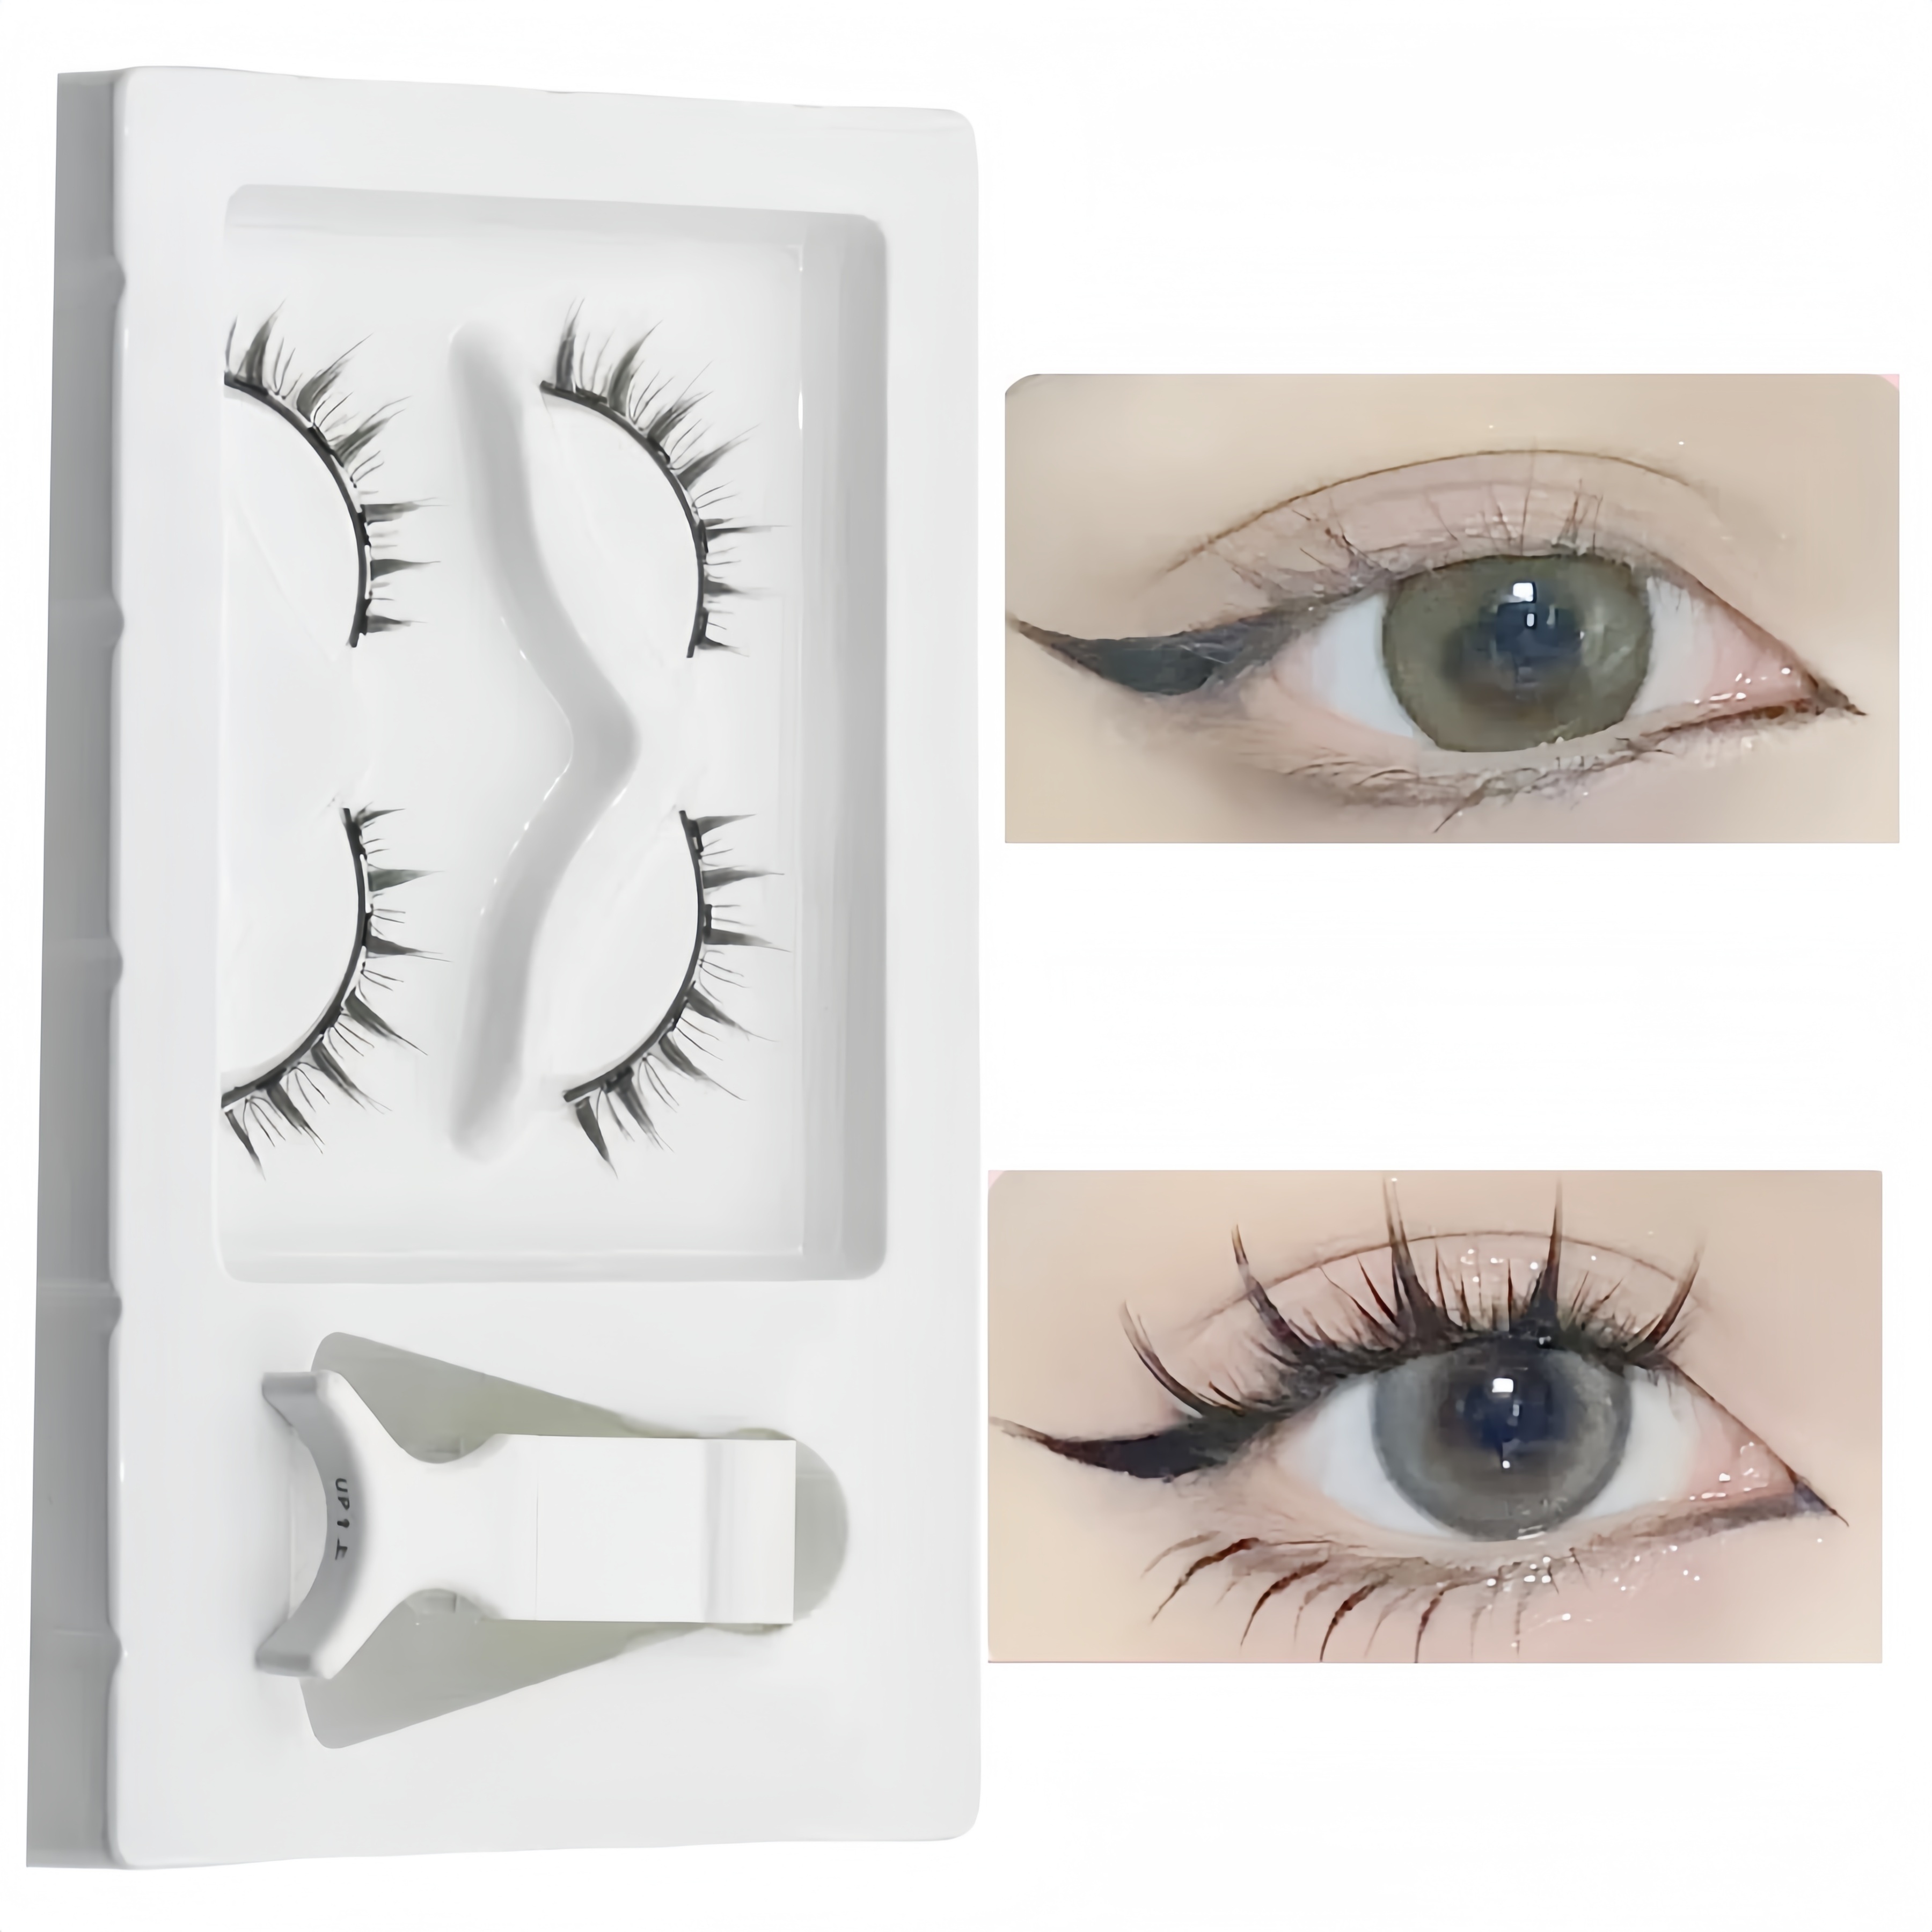 

Magnetic Cat Eye False Eyelashes Kit - Reusable, Soft & Natural Look With Bonus Lash Curler